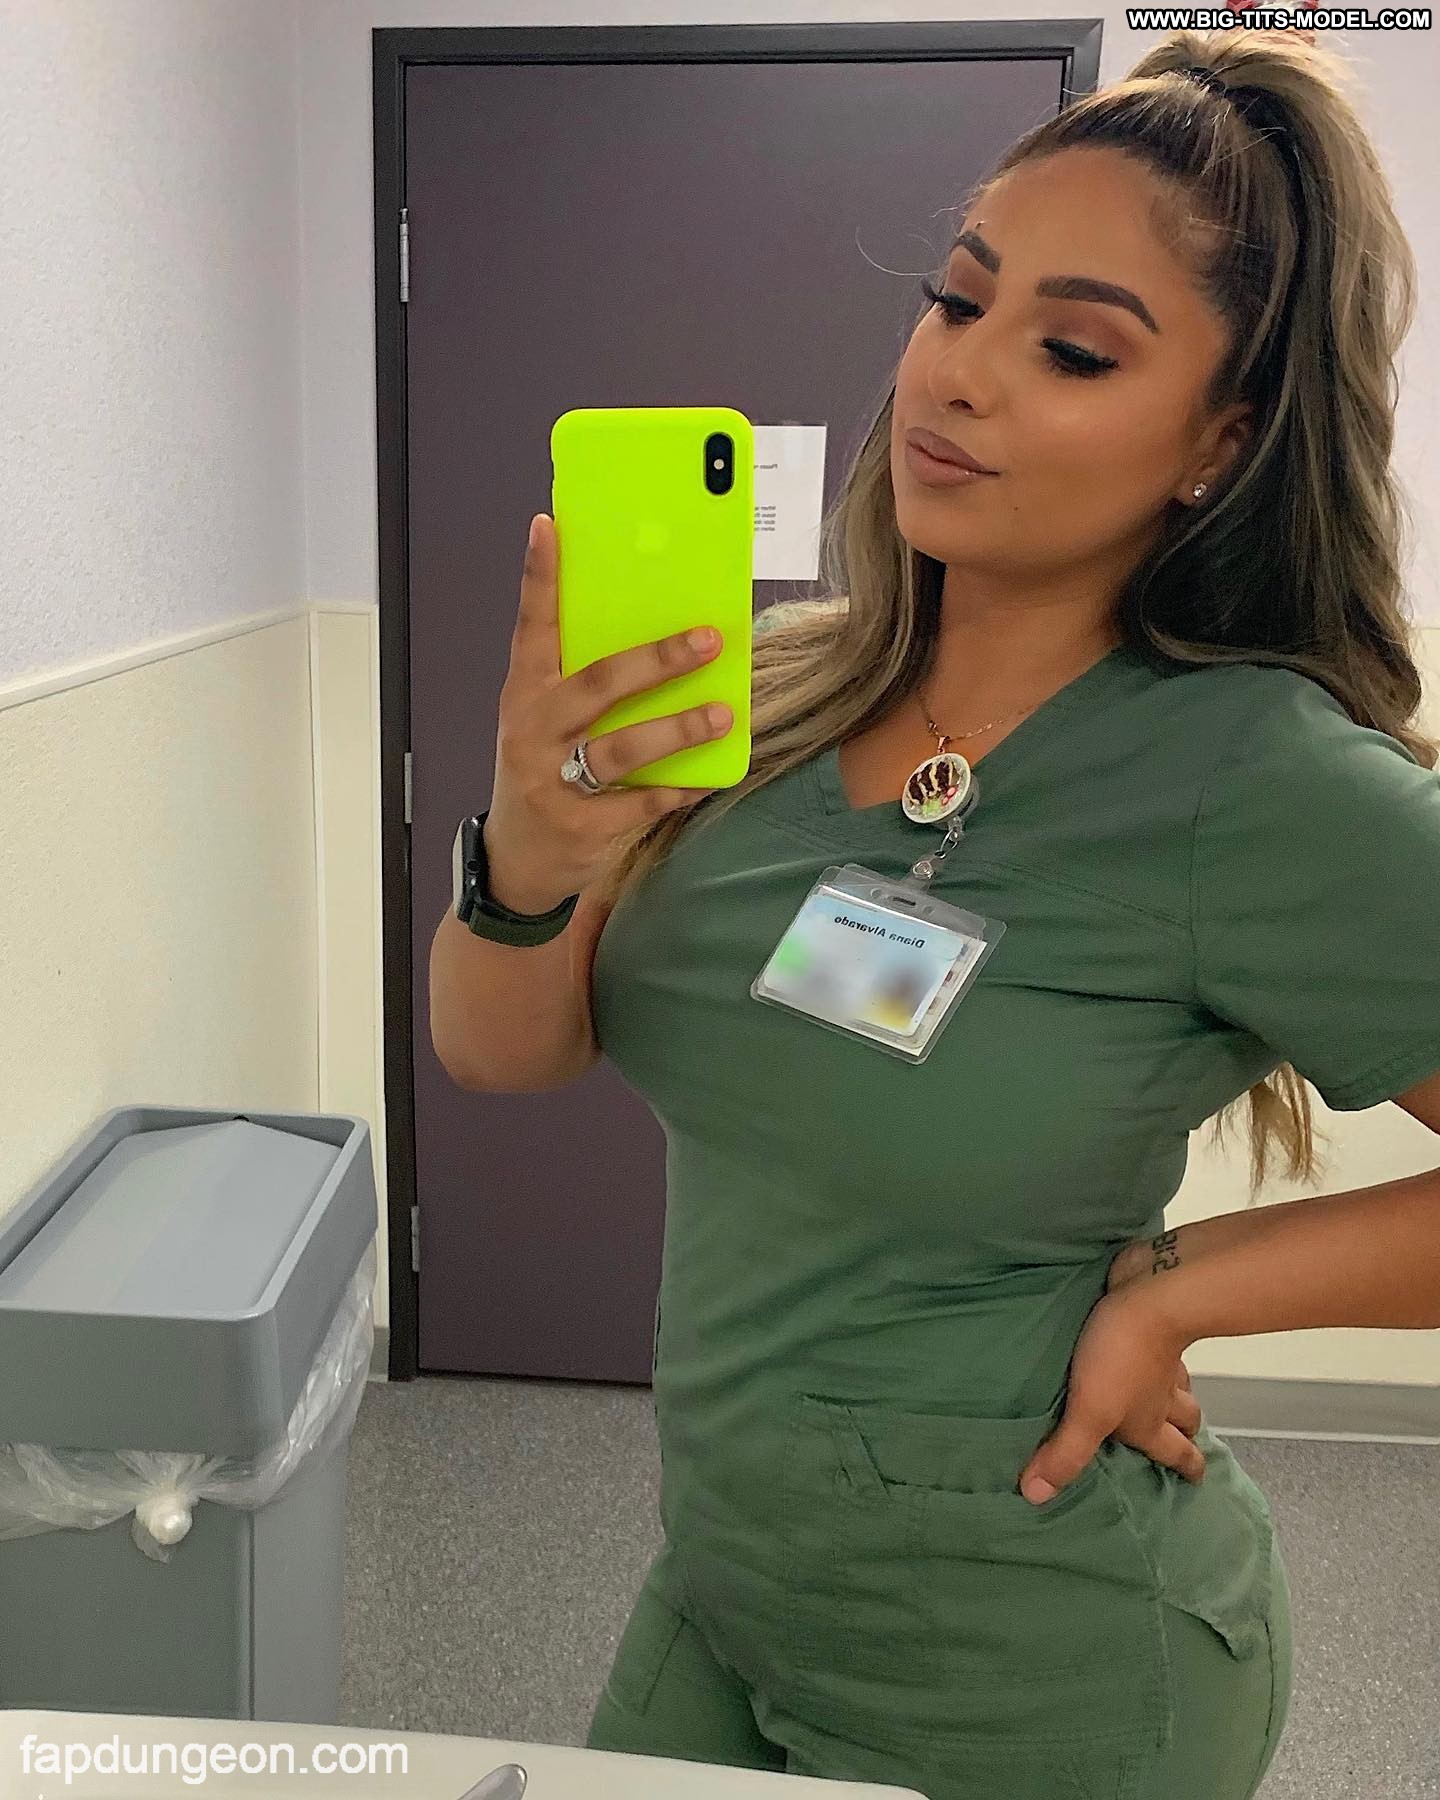 Dianaalvaradx Model Straight Brunette Porn Photos Nurse Snapchat Nudes